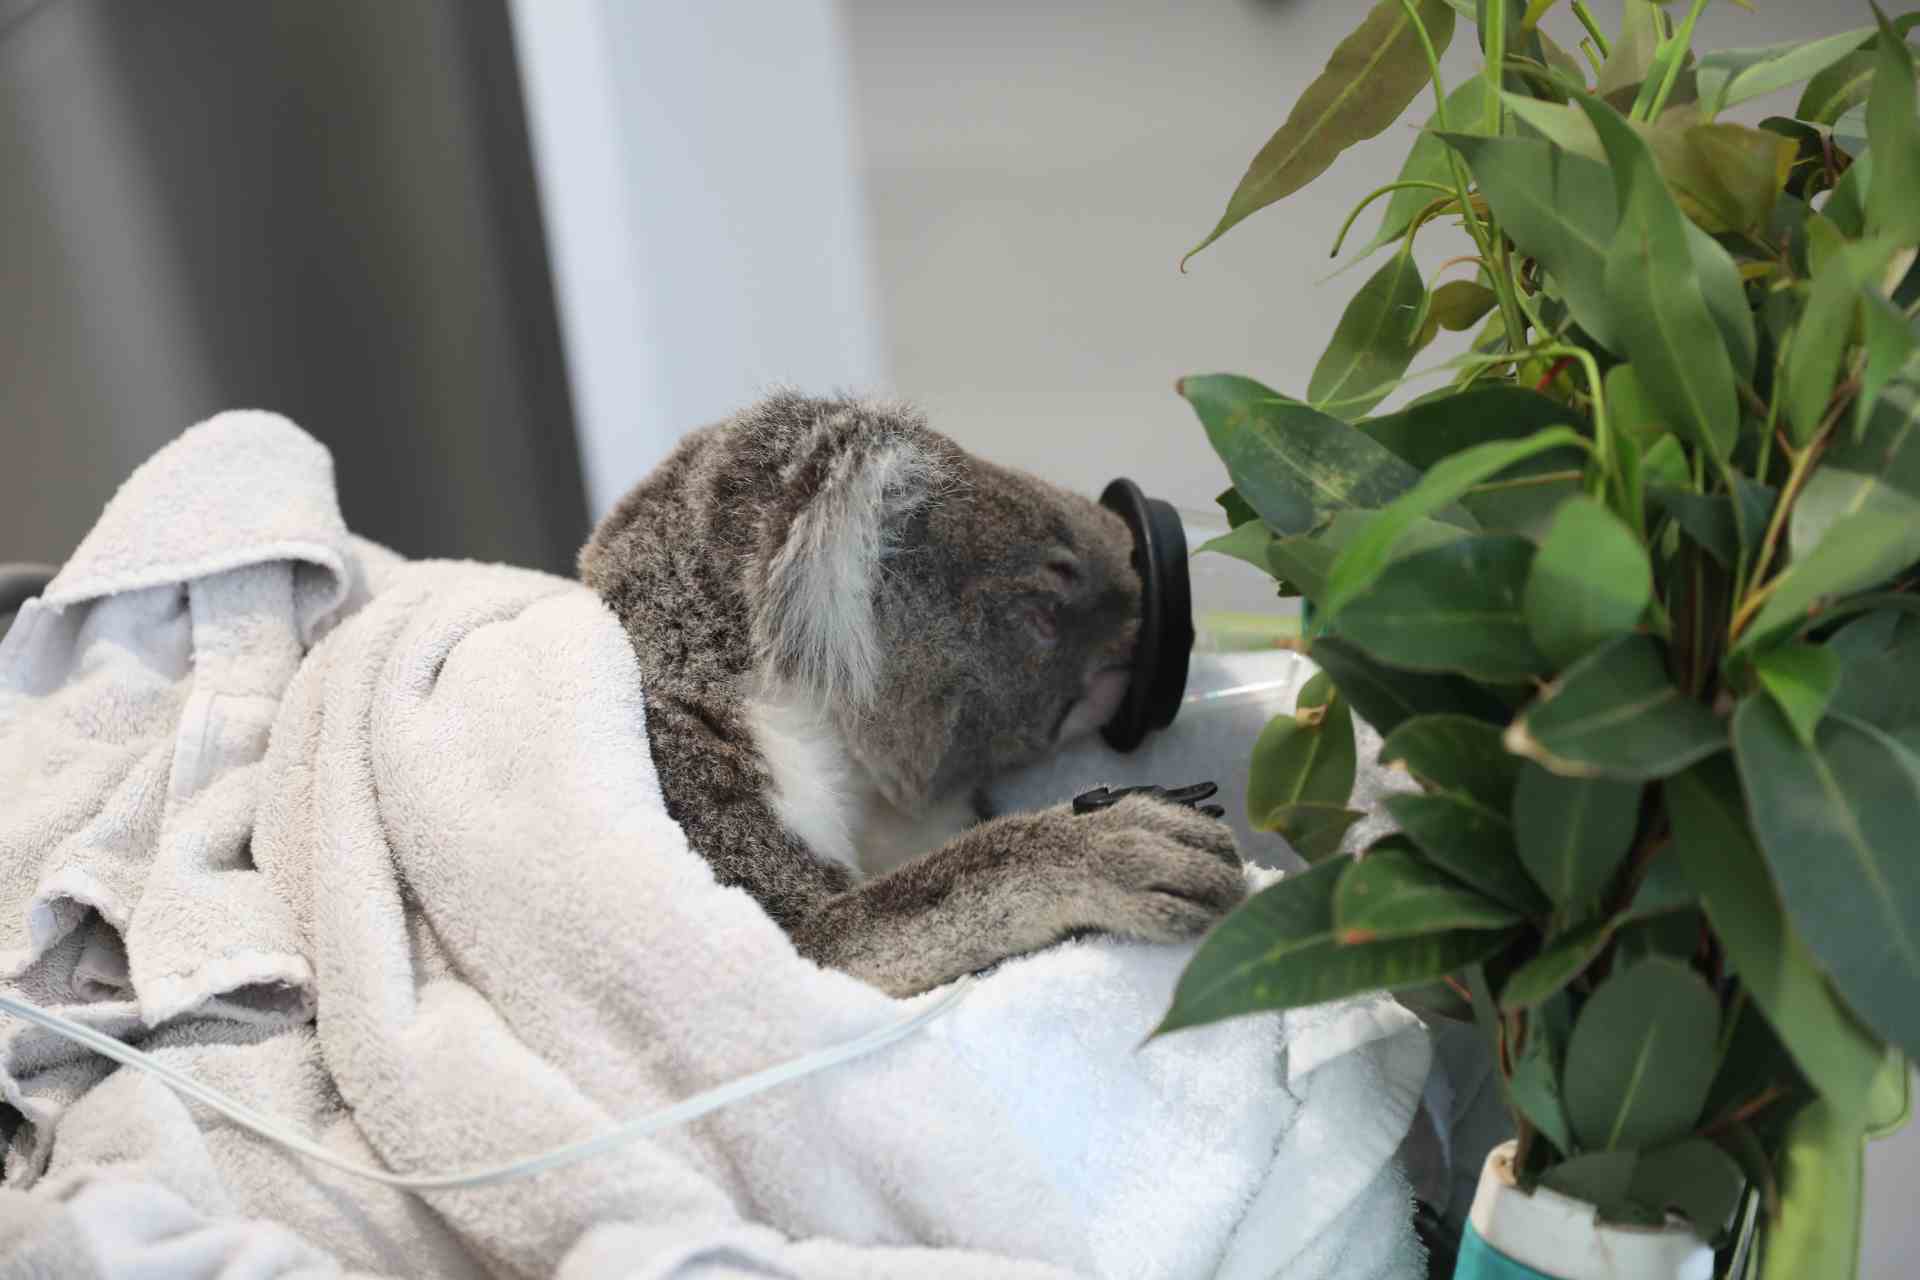 Kevin recovering from sedation at Port Stephens Koalas Wildlife Hospital © WWF-Aus / Madeleine Smitham